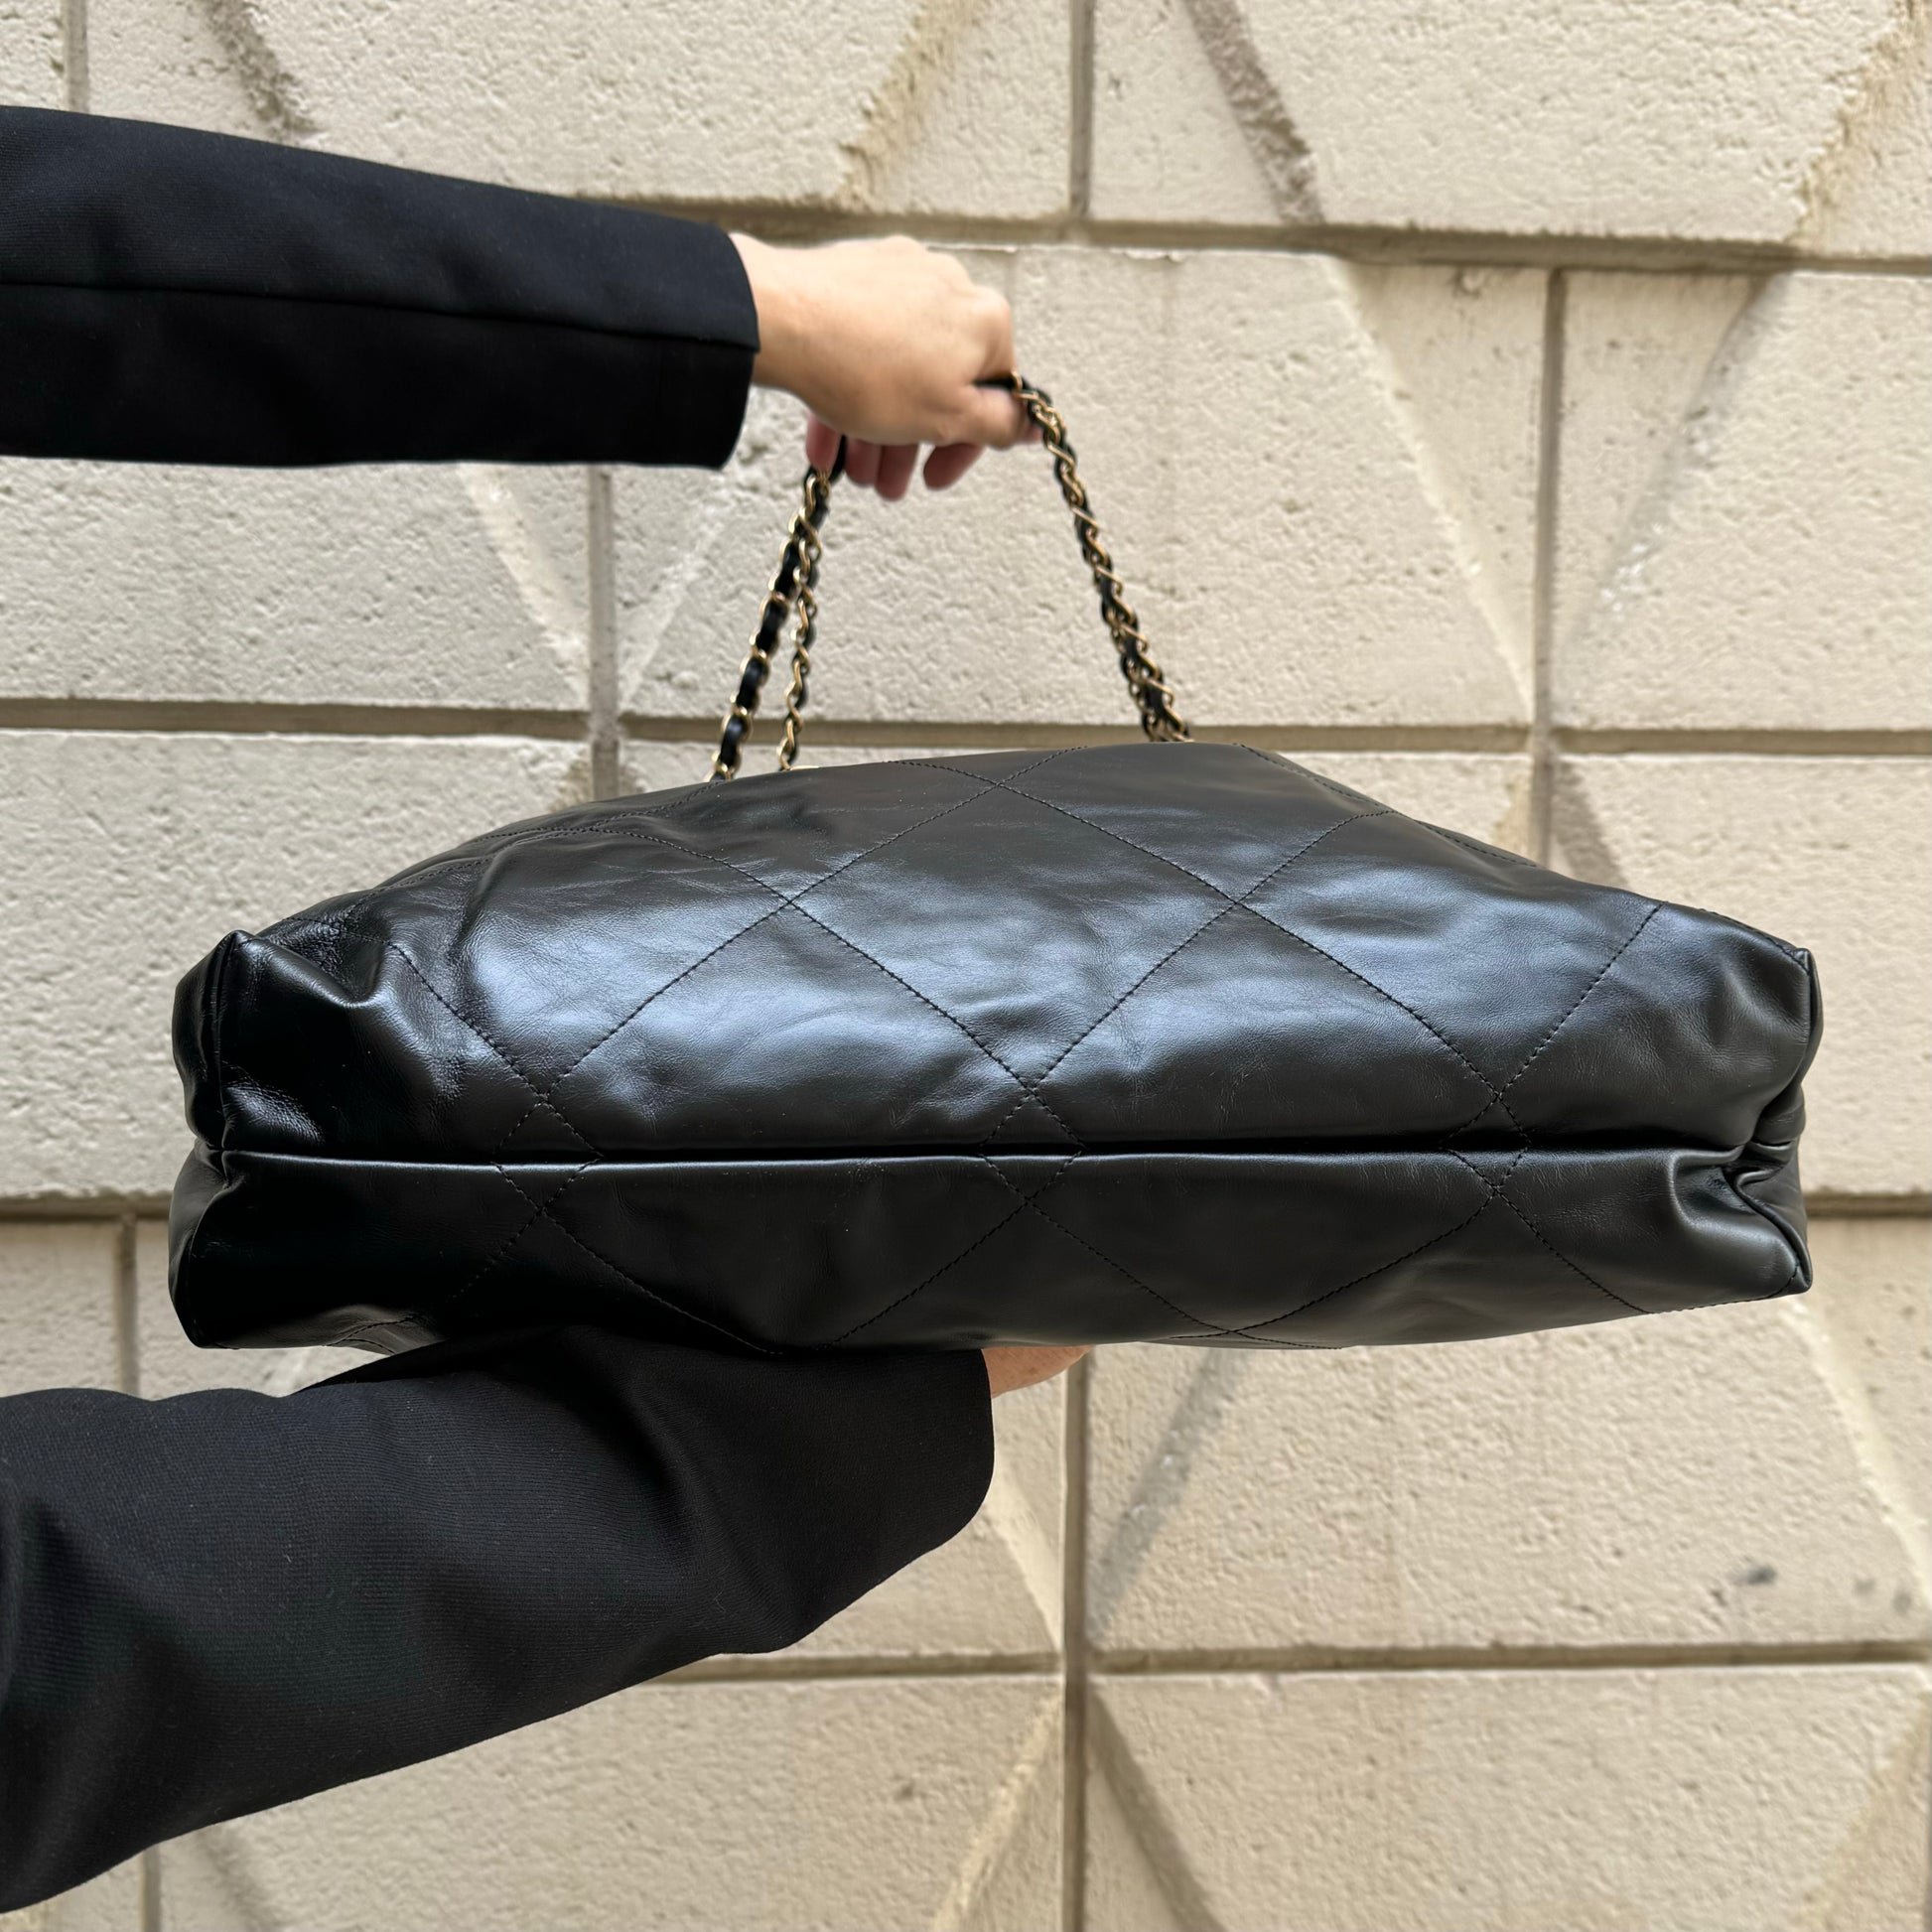 Chanel Medium Hobo Bag